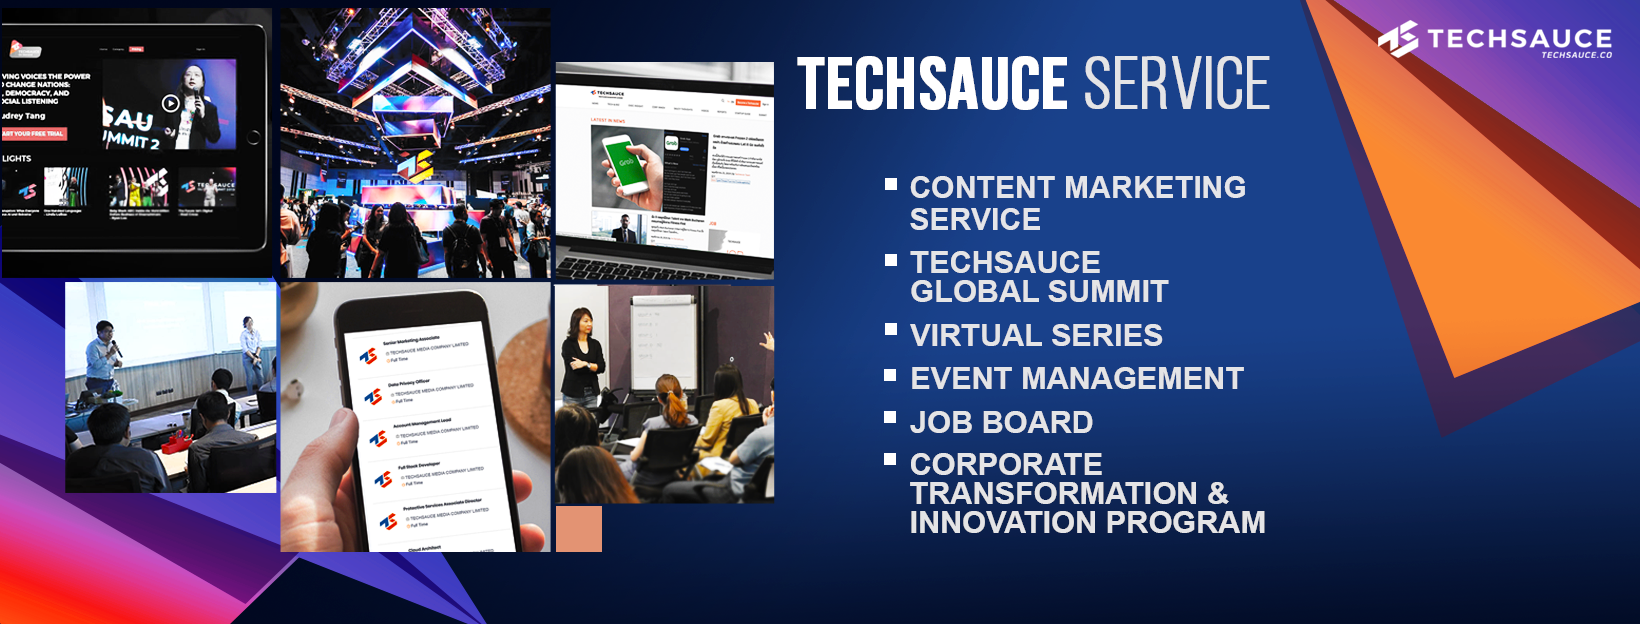 Techsauce Services